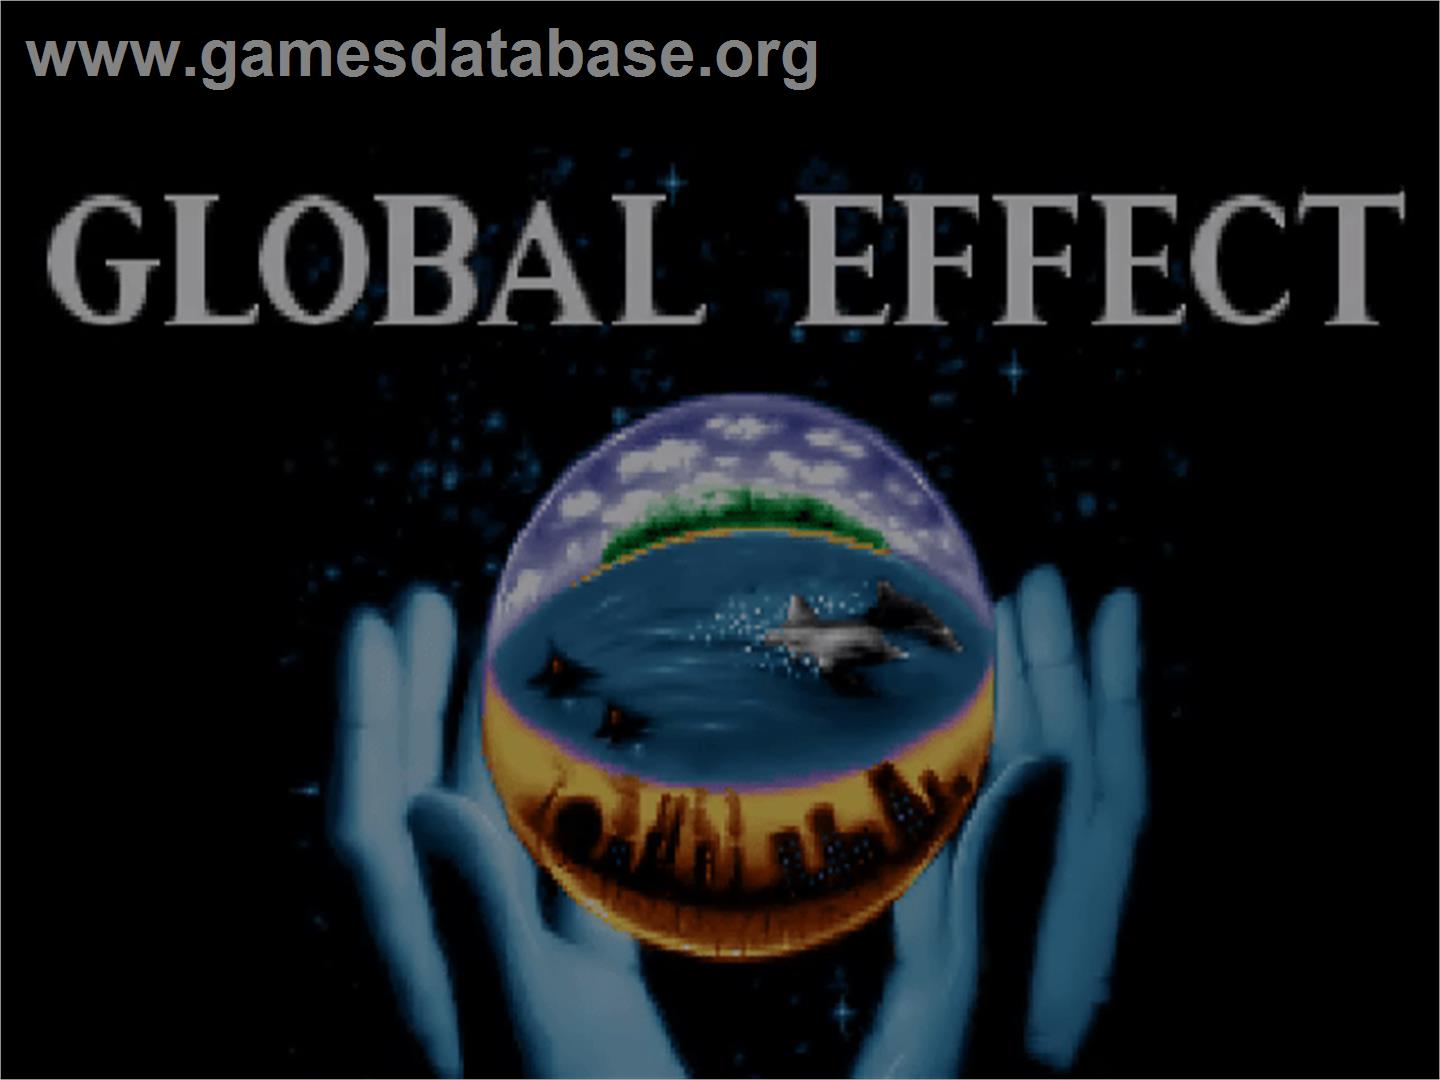 Global Effect - Commodore Amiga CD32 - Artwork - Title Screen